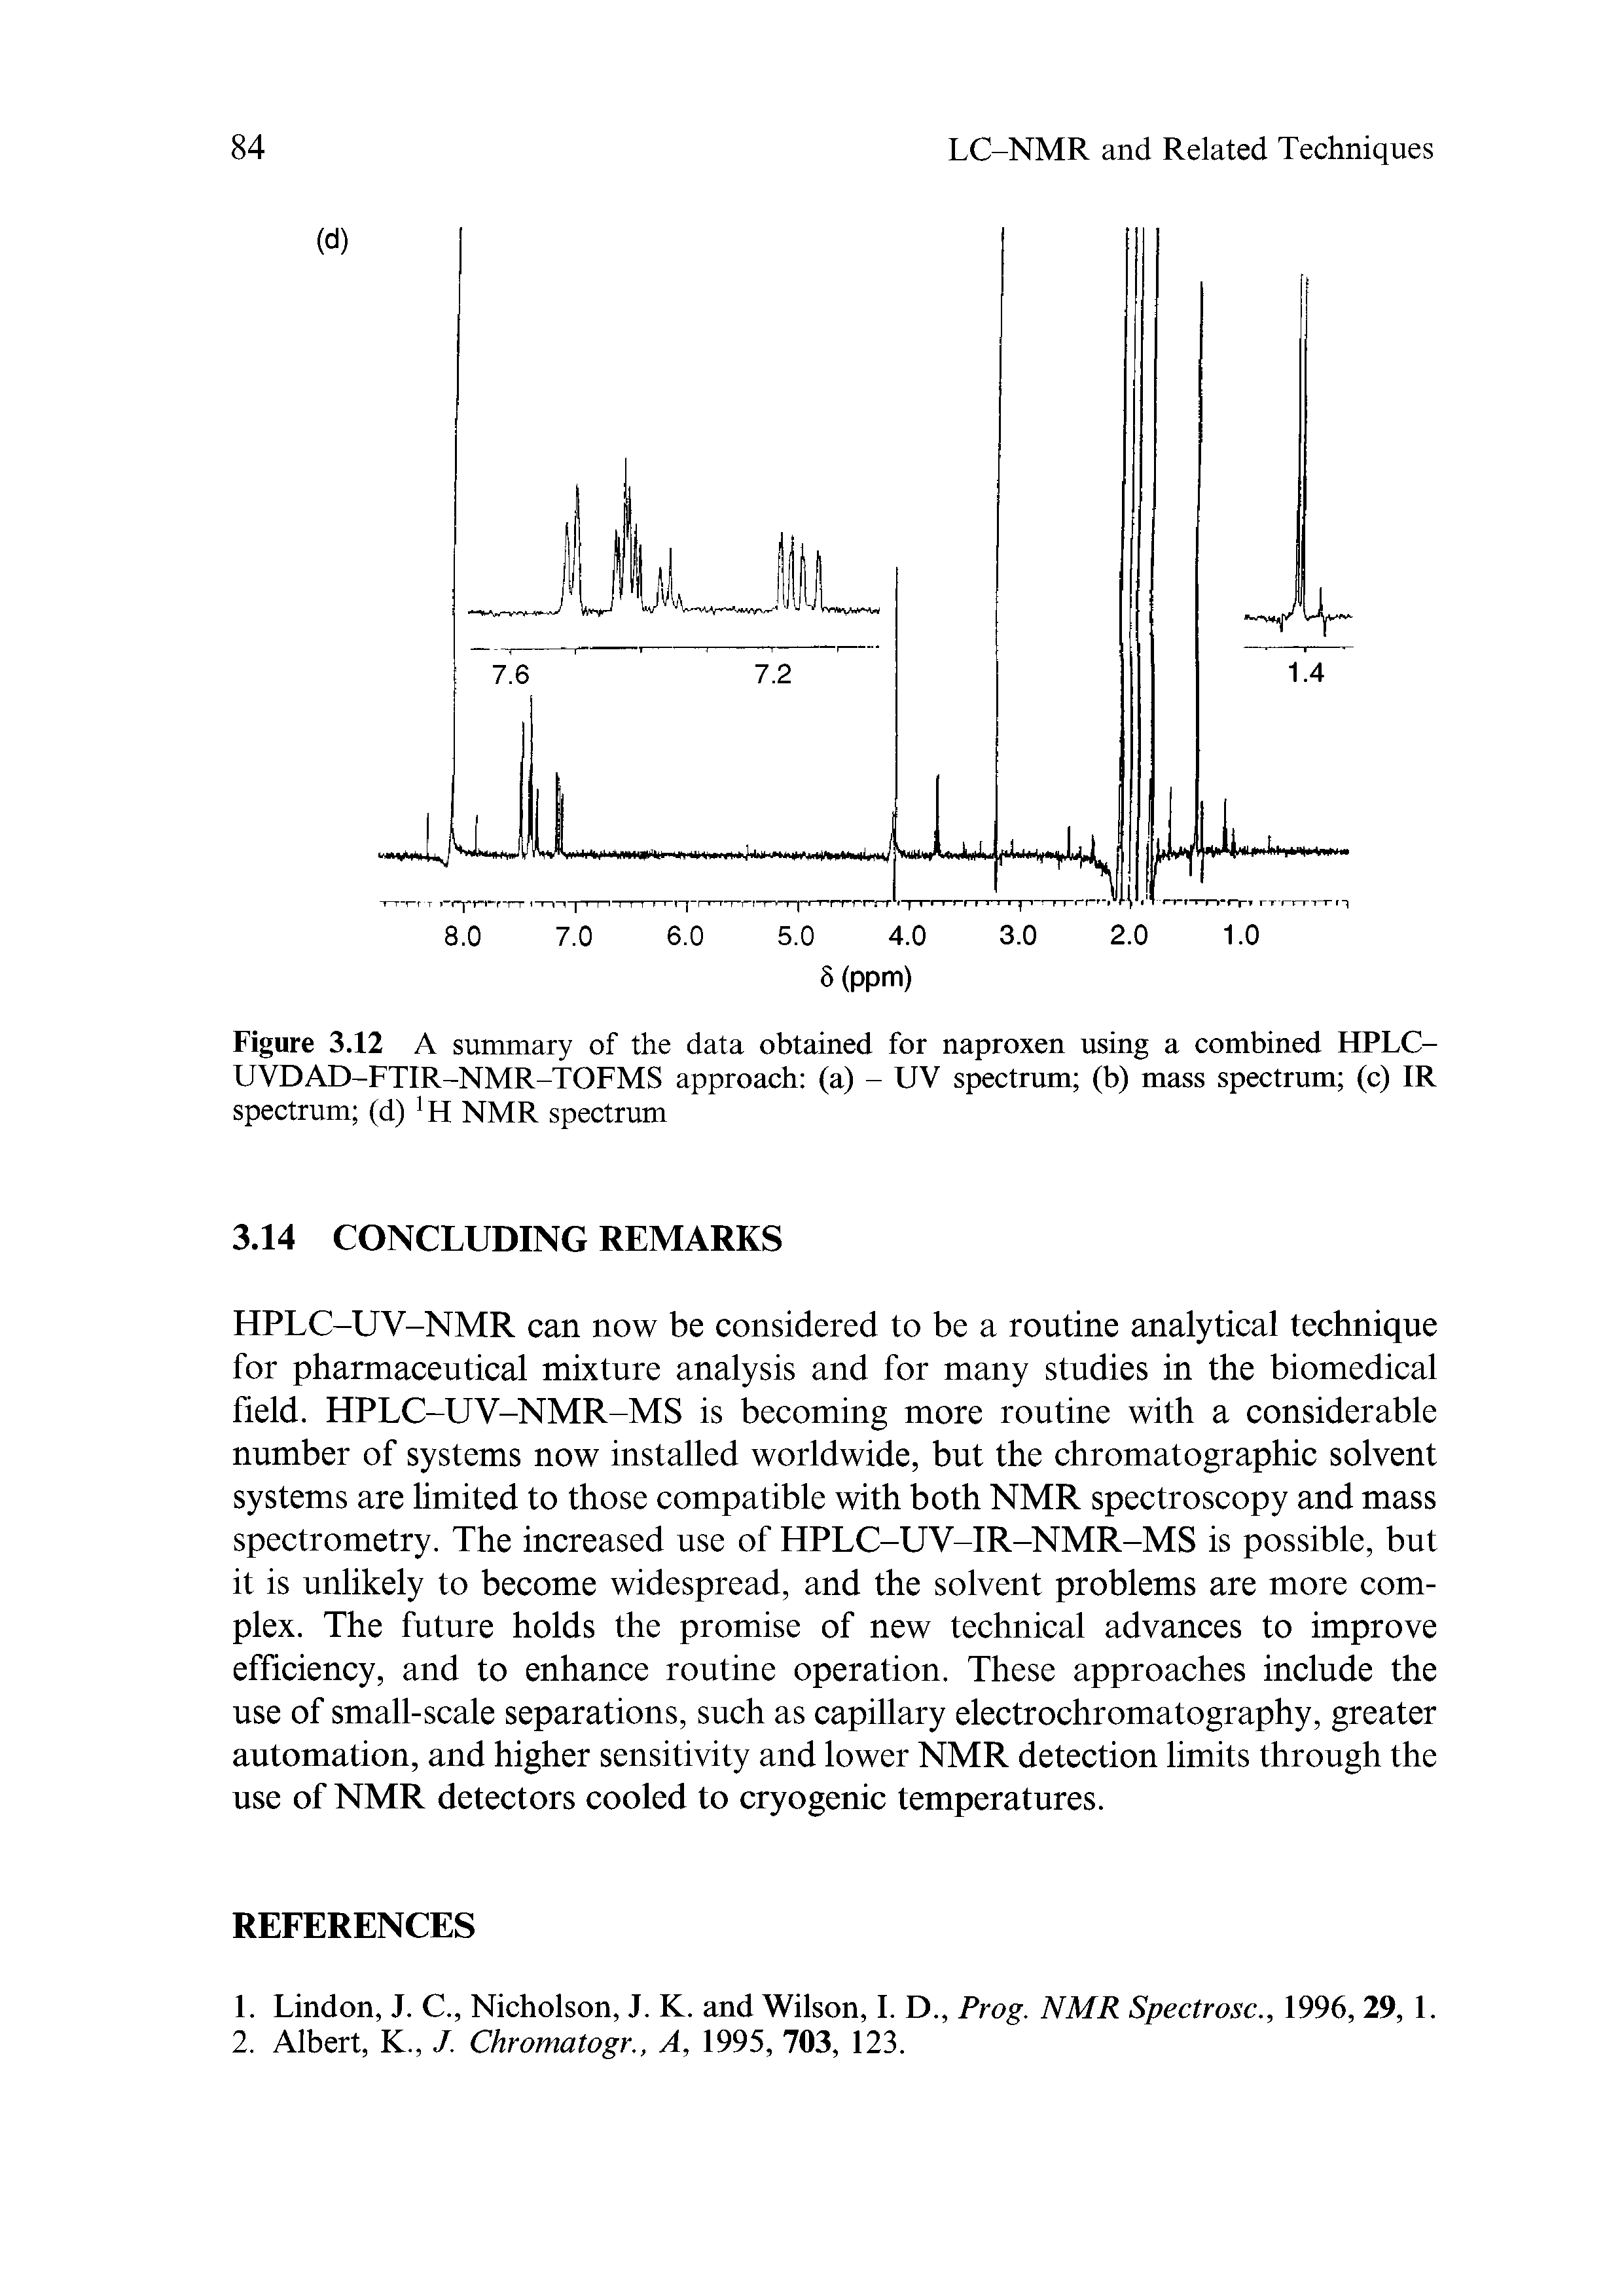 Figure 3.12 A summary of the data obtained for naproxen using a combined HPLC-UVDAD-FTIR-NMR-TOFMS approach (a) - UV spectrum (b) mass spectrum (c) IR spectrum (d) H NMR spectrum...